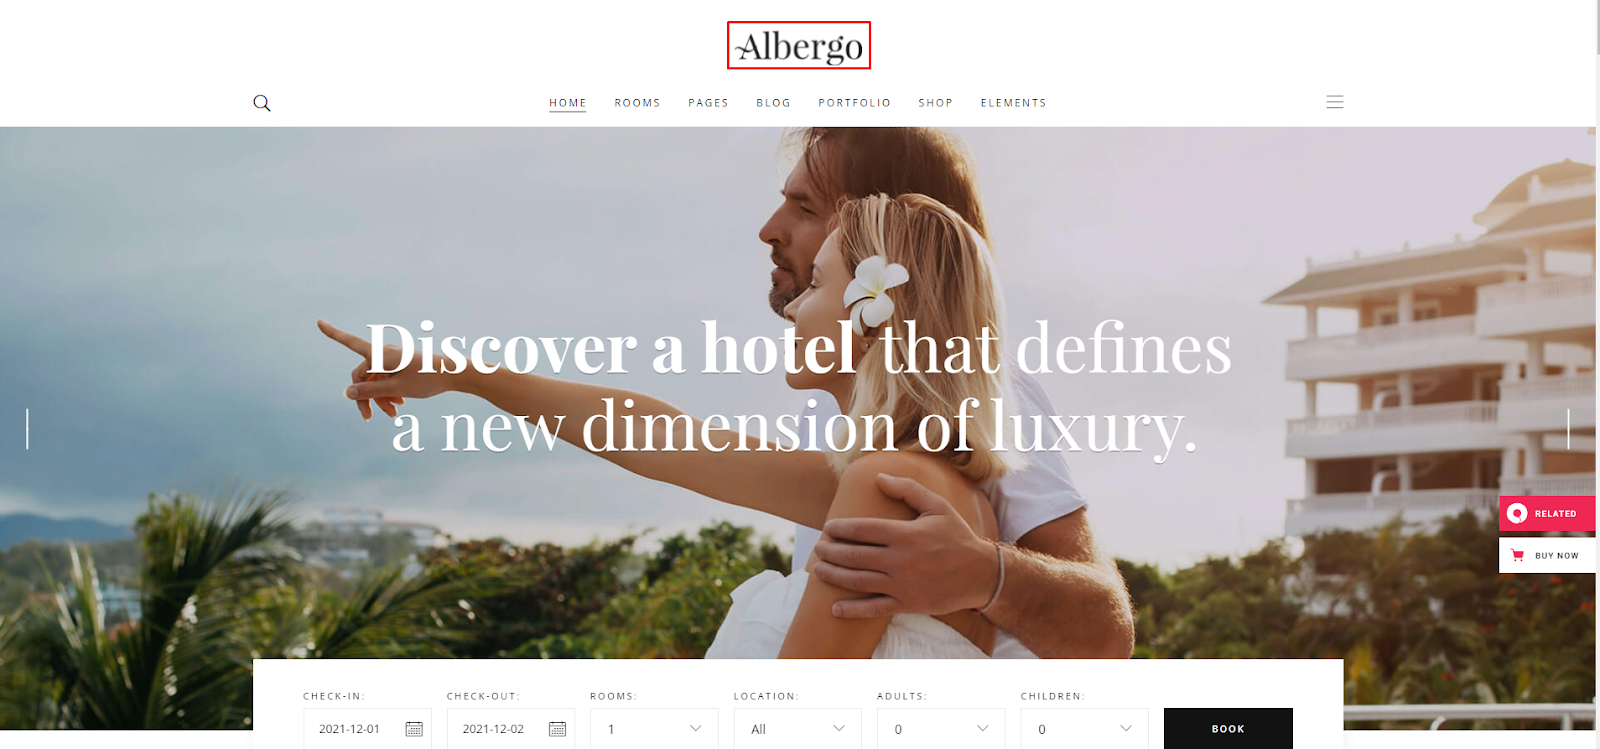 Albergo - Accommodation and Hotel WordPress Theme